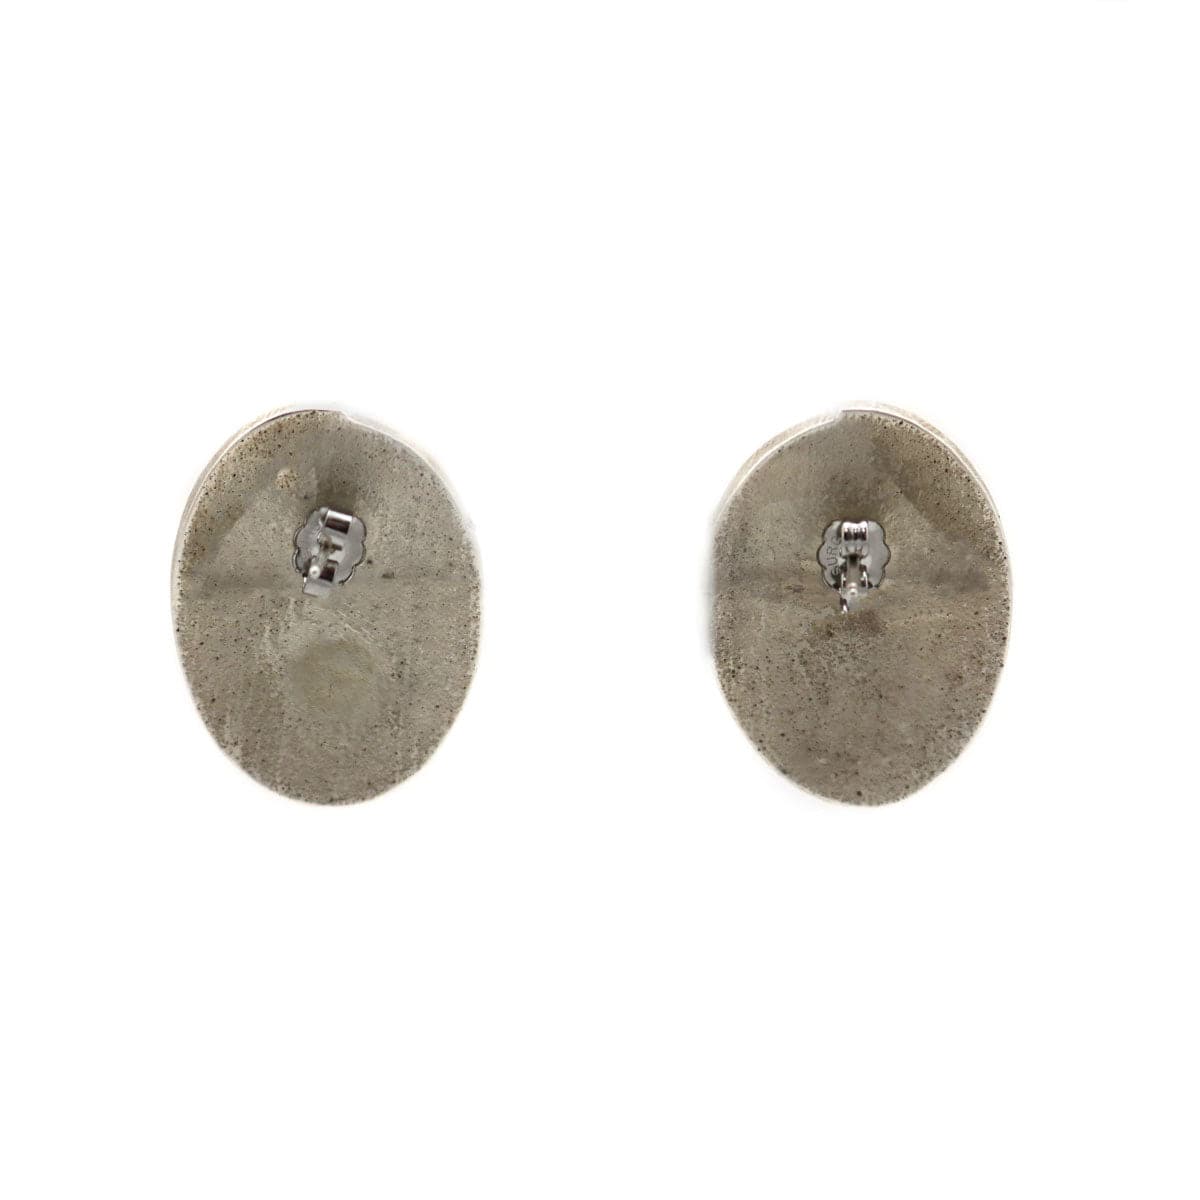 Anthony Lovato (b. 1958) - Santo Domingo (Kewa) Contemporary Silver Post Earrings with Cornstalk Pictorial, 1.25" x 1" (J13461-CO)2
